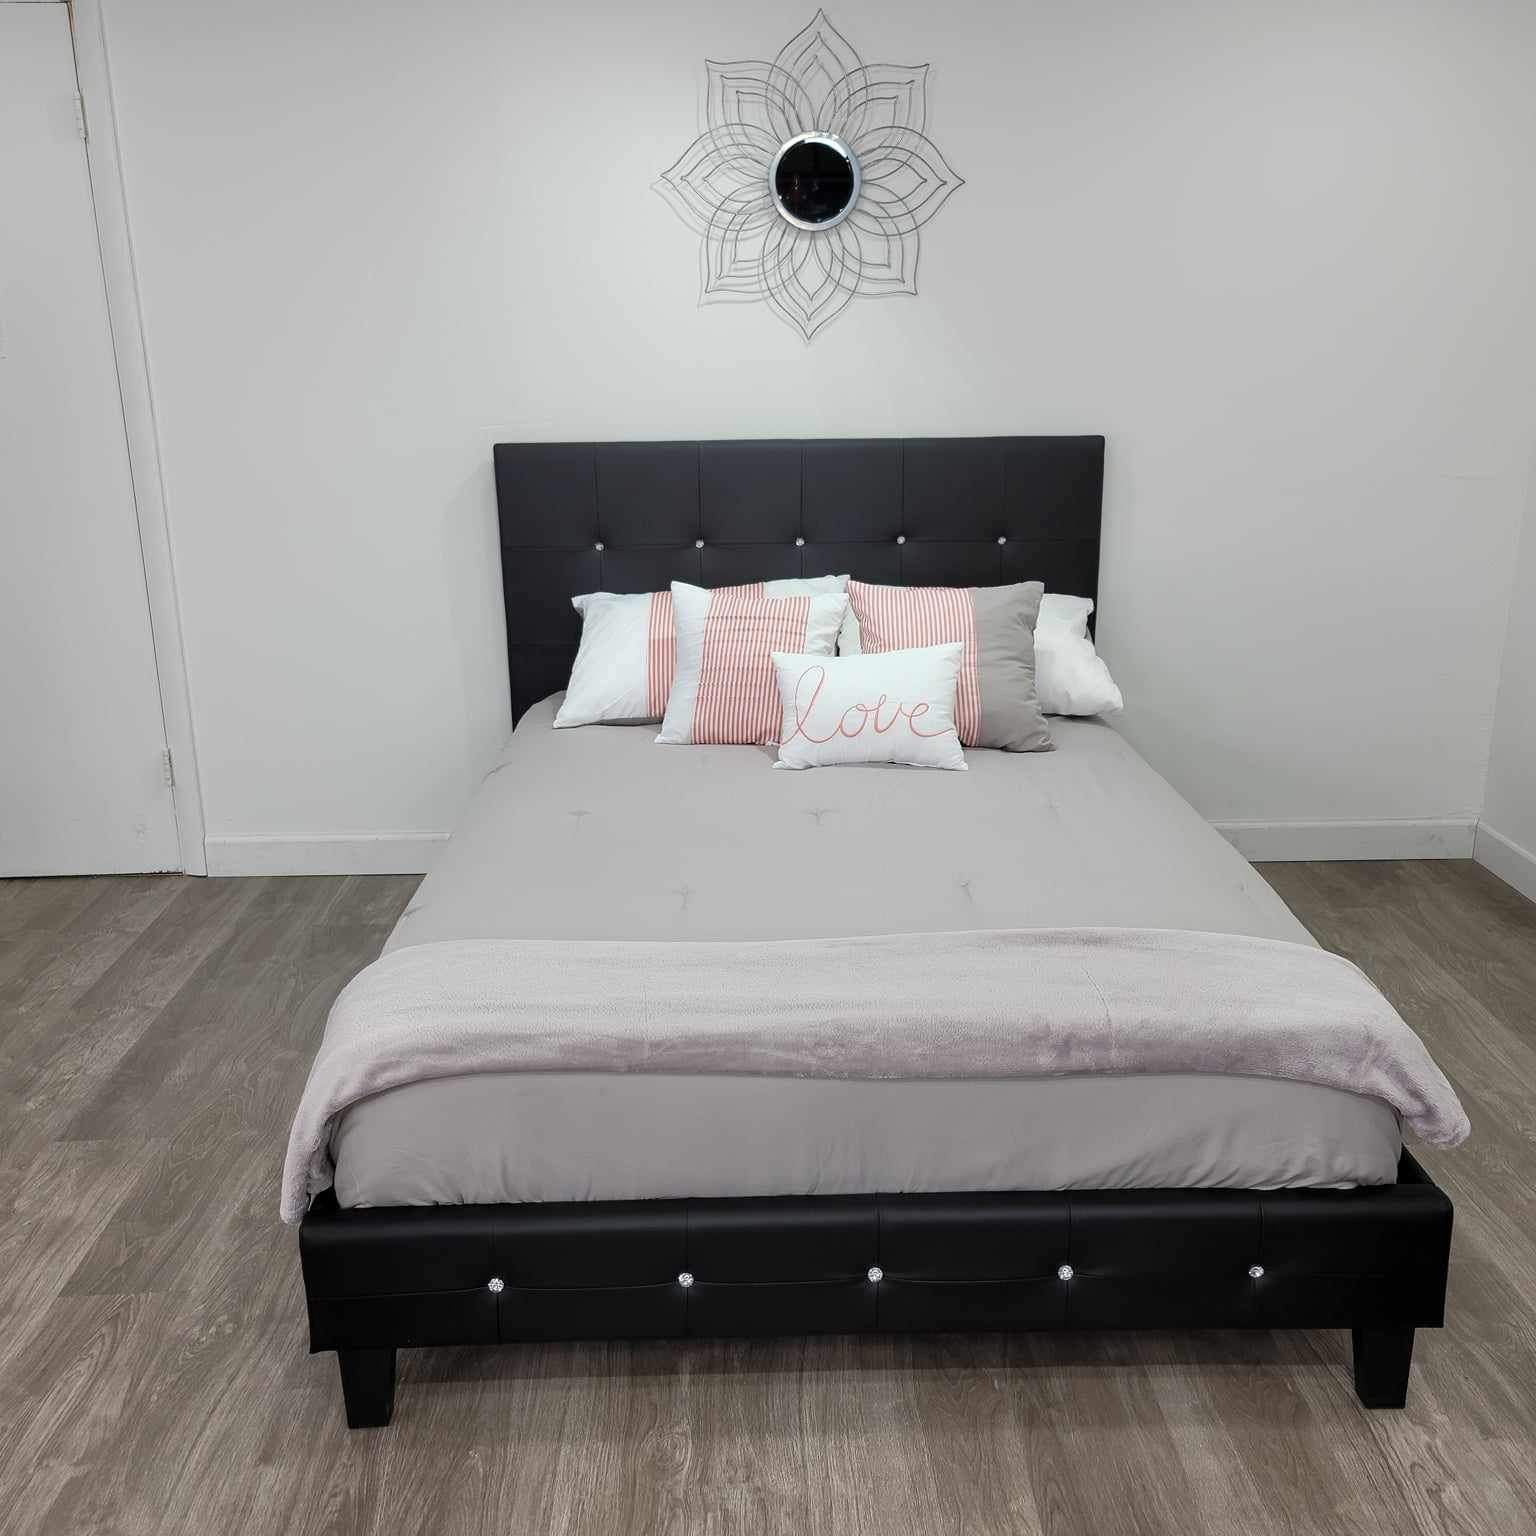 Brand New Queen Bed Frame with Mattress / Cama Queen con Colchón Nueva a Estrenar … Delivery Available 🚚